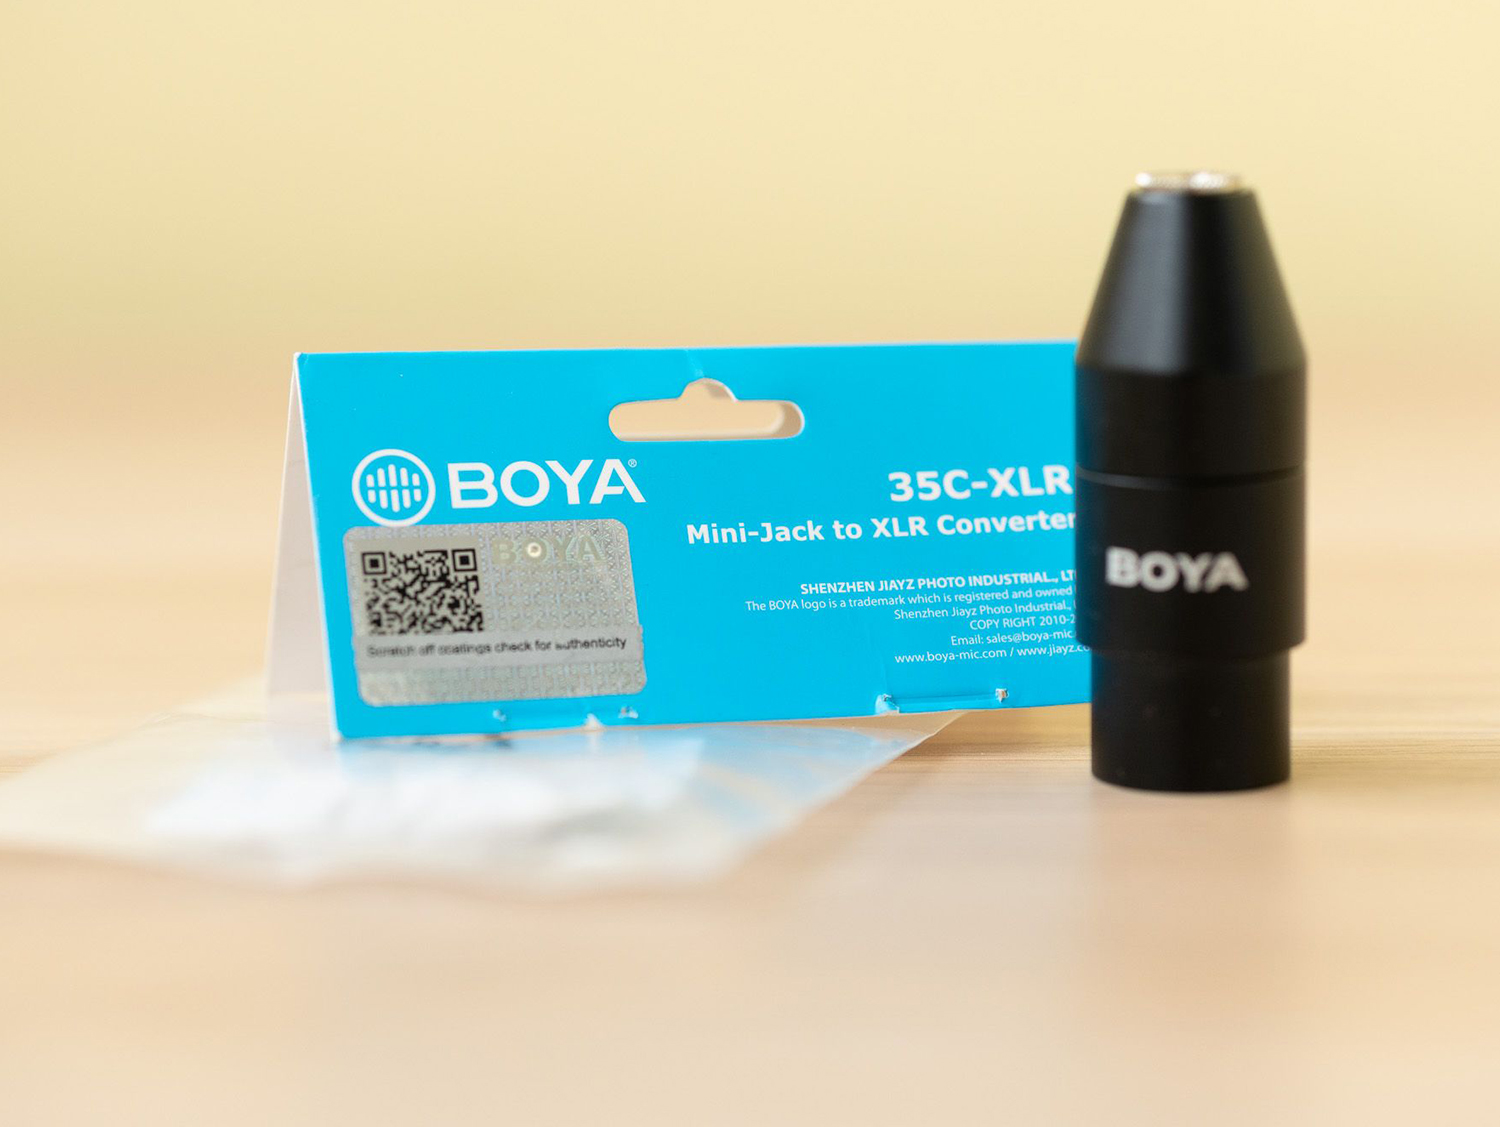 BOYA 35C-XLR Pro Adapter Convert 3.5mm Input to Male XLR Output